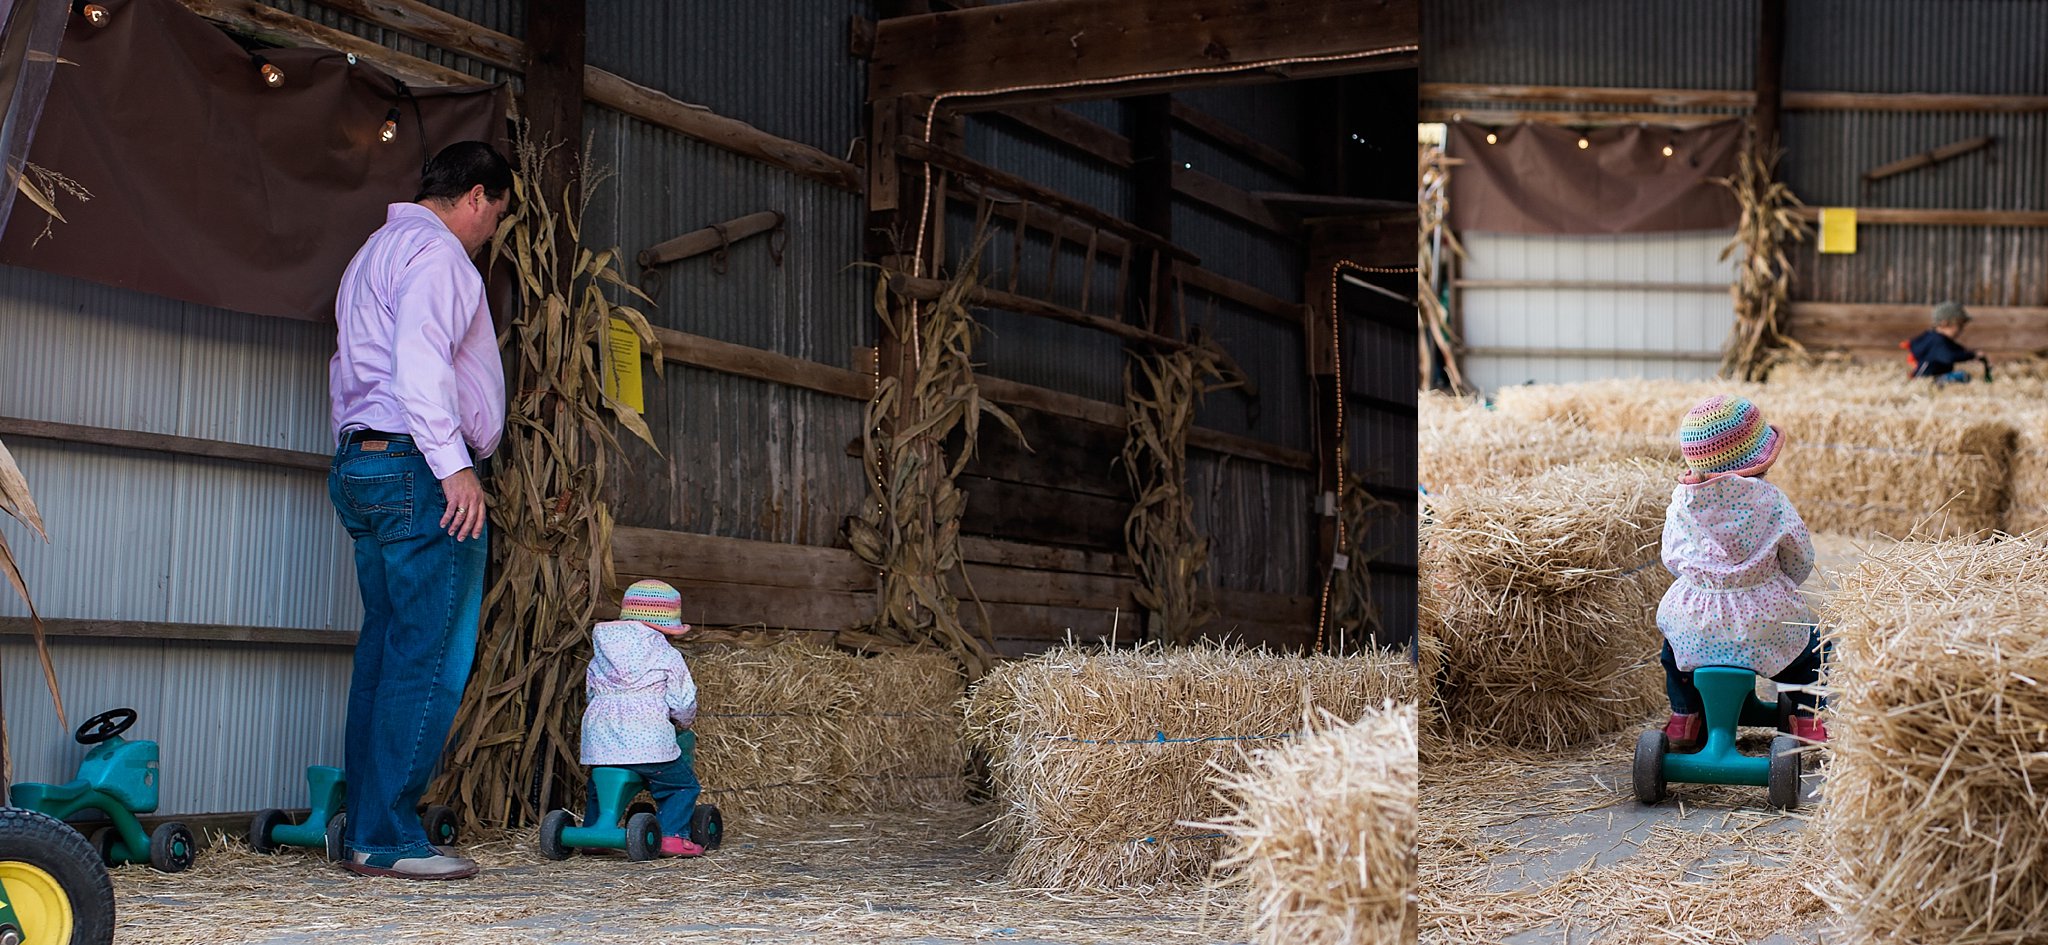 Jennifer Blaak Photography, Hamilton Lifestyle Family Photographer, Family Session at Dyments Farm in Dundas, Title girl riding toy through barn hay bales